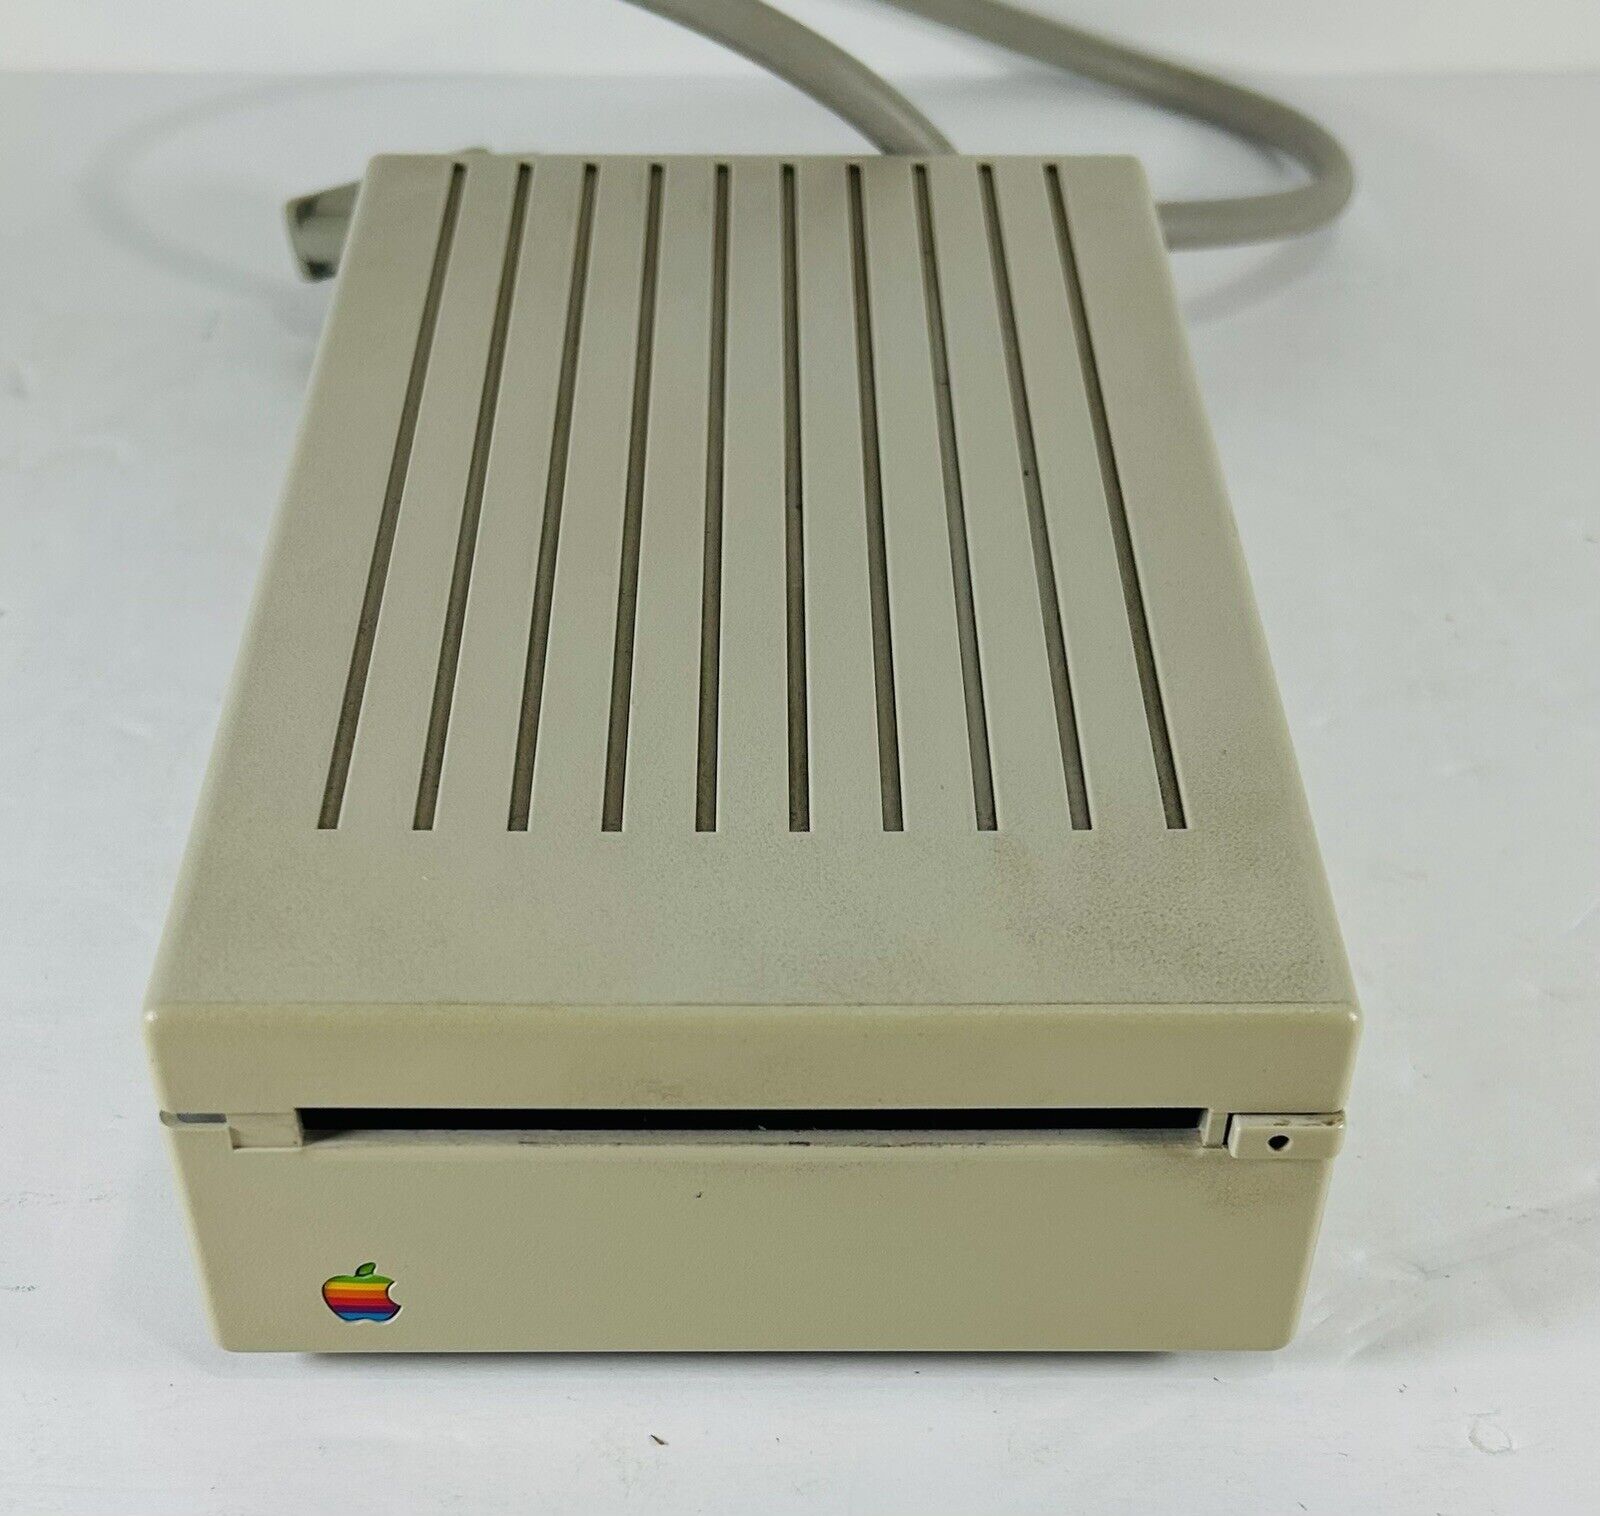 Vintage Apple 3.5 Drive Floppy Disk Drive A9M0106